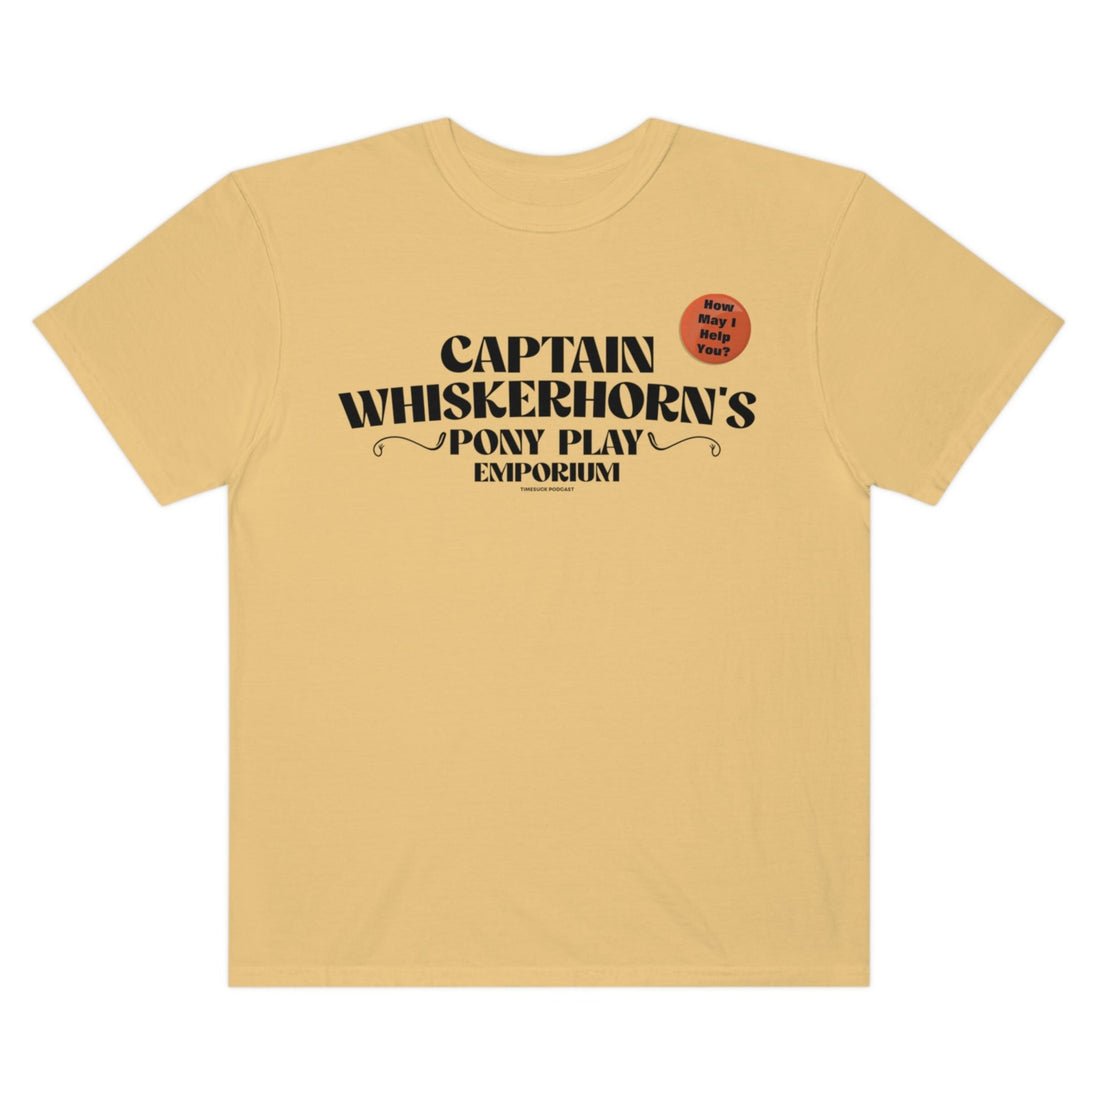 Captain Whiskerhorn's Employee Tee